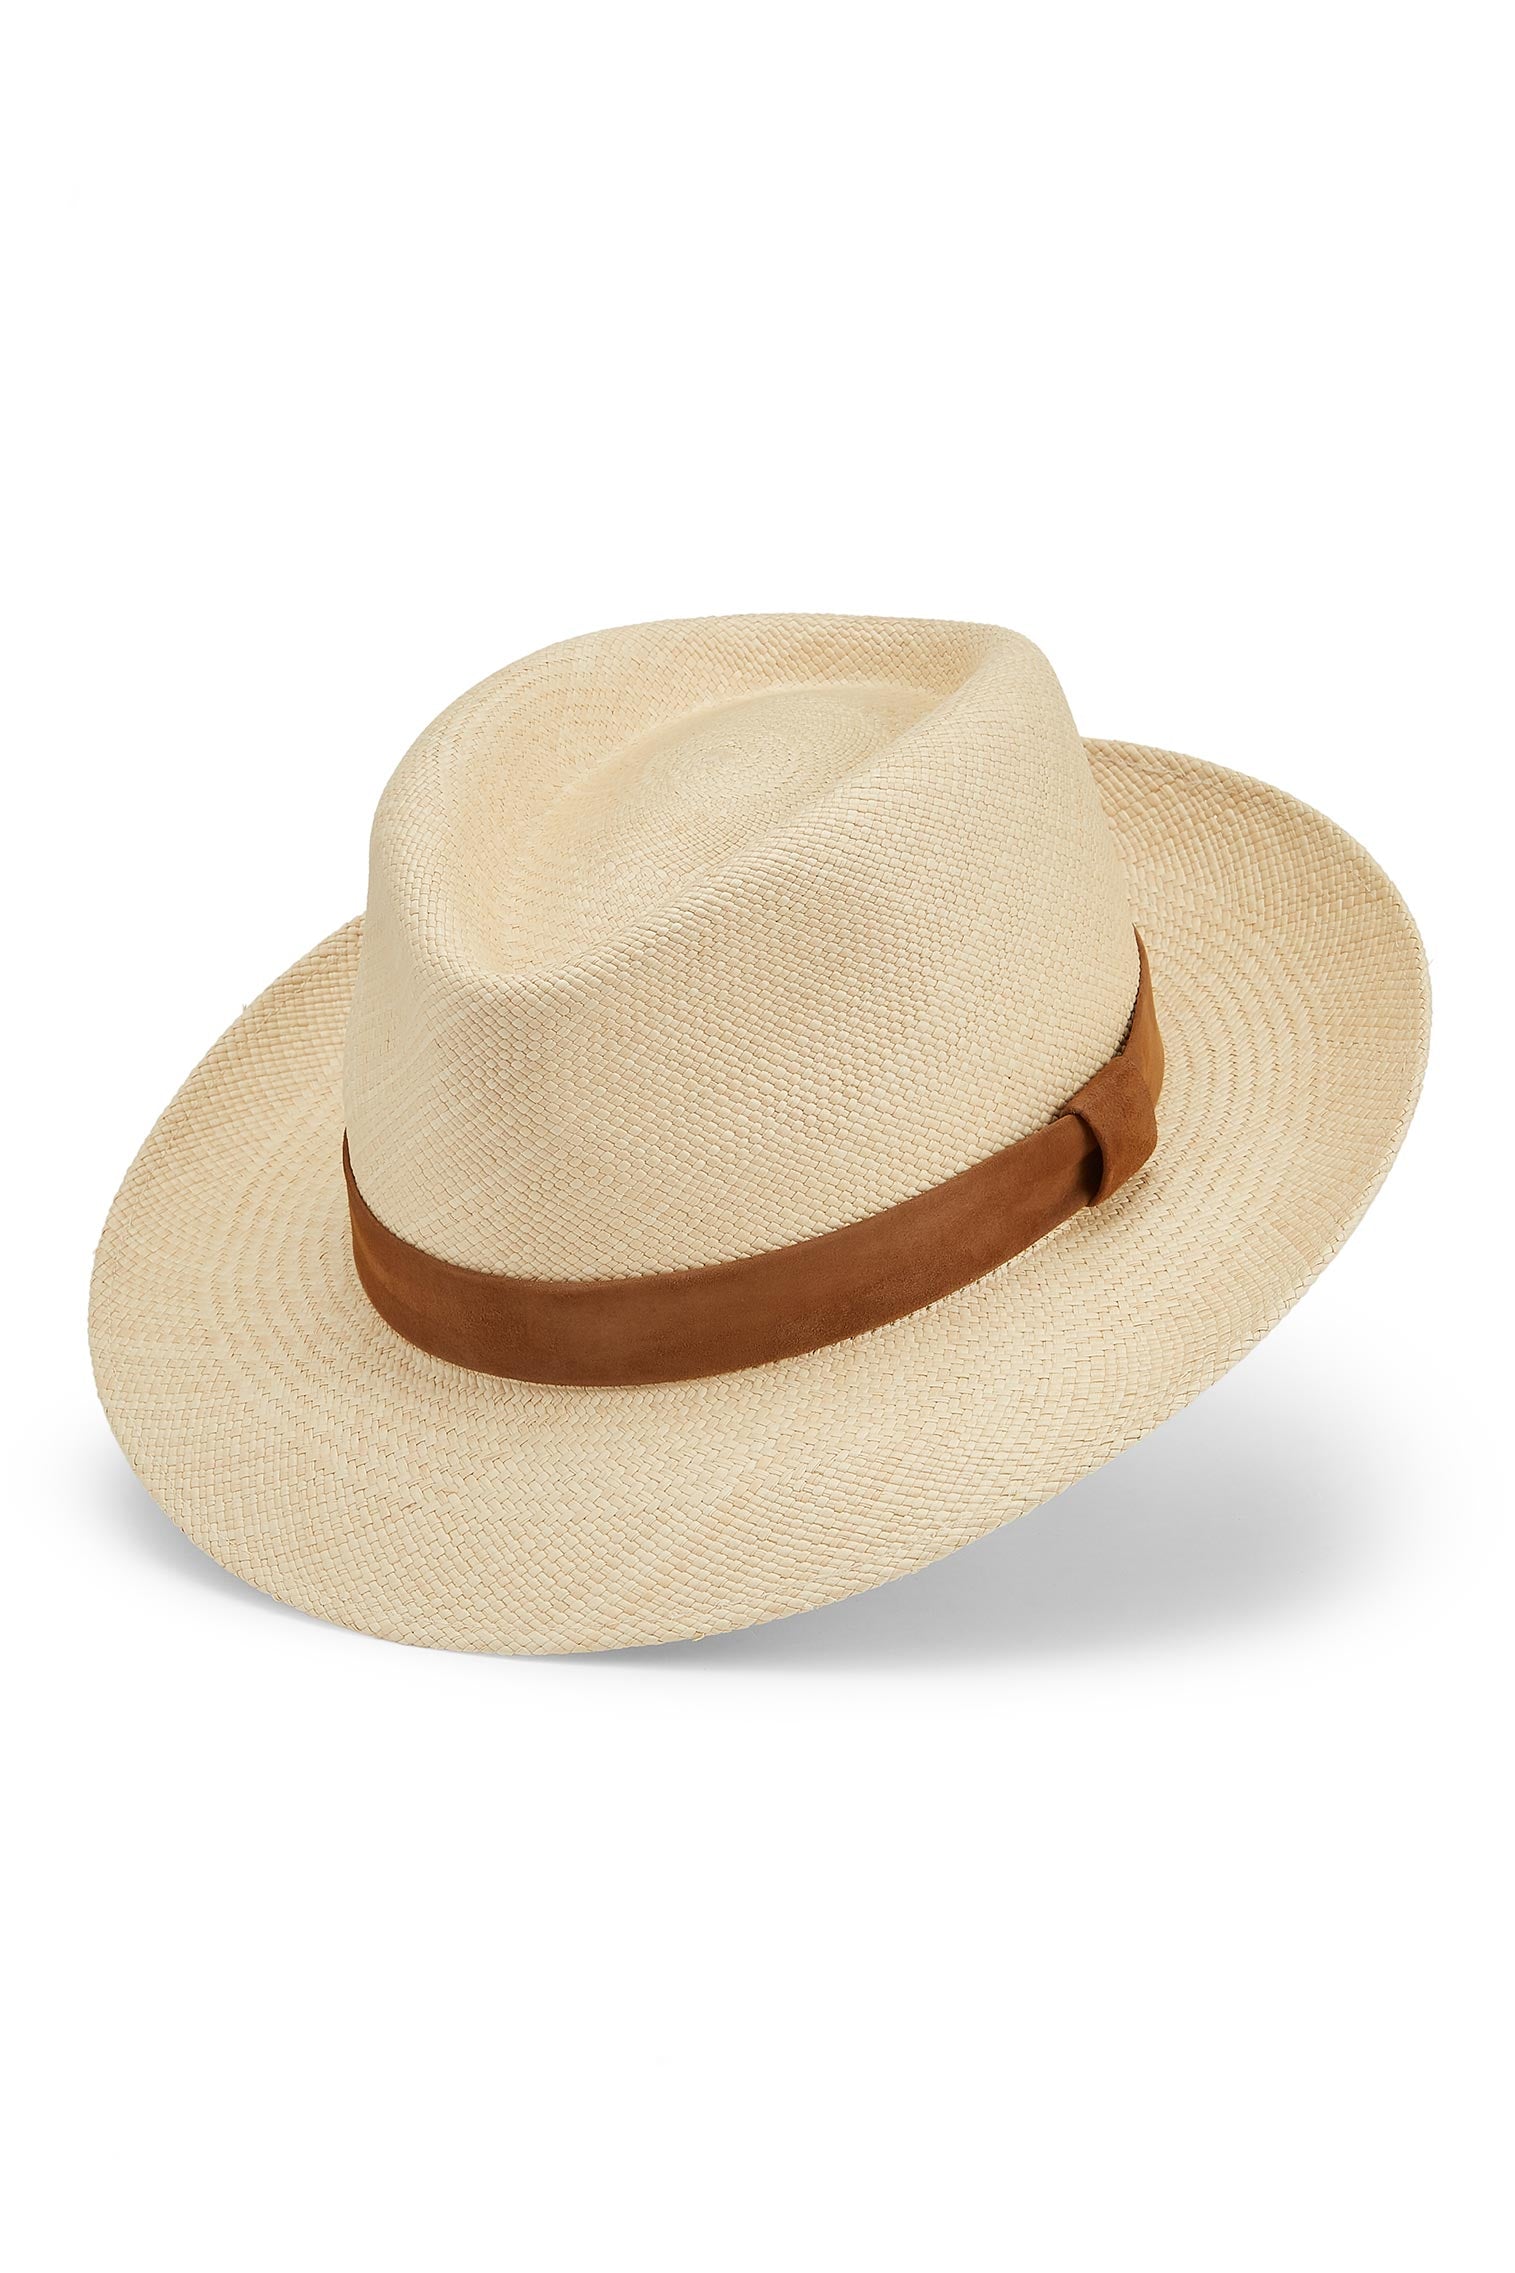 Santa Barbara Panama - Best Selling Hats - Lock & Co. Hatters London UK